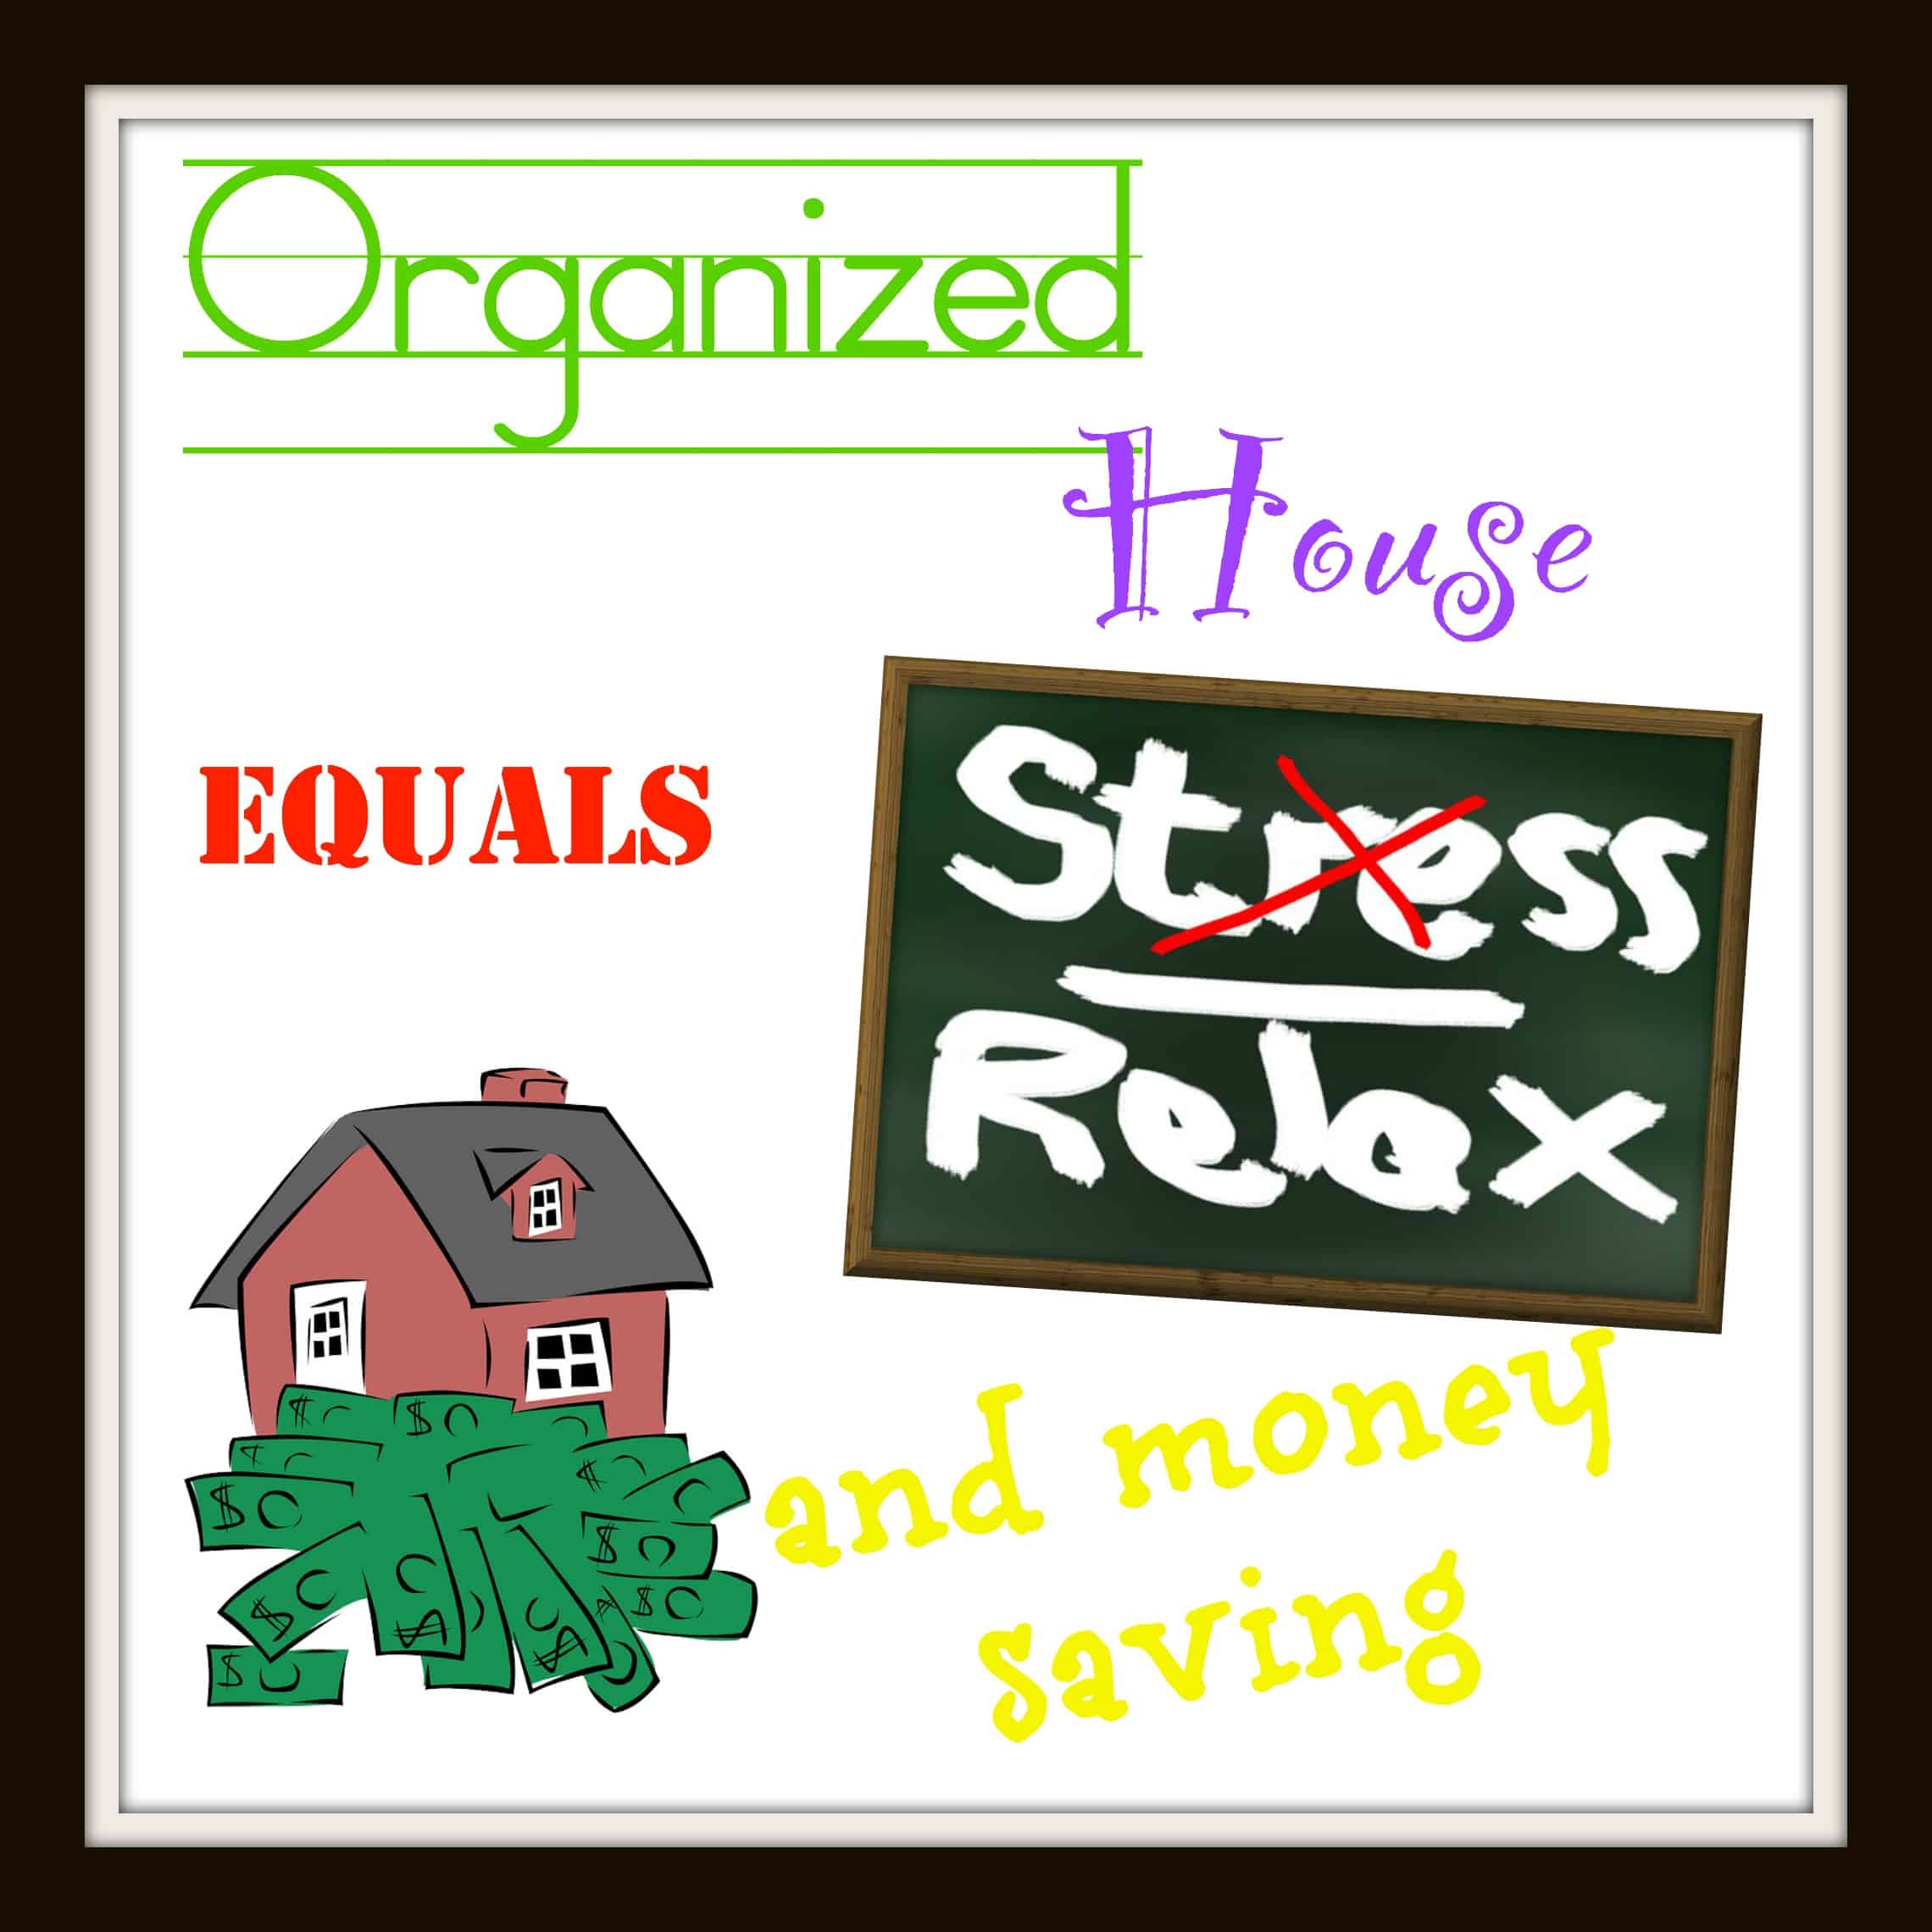 An Organized House equals Less Stress & Money Savings